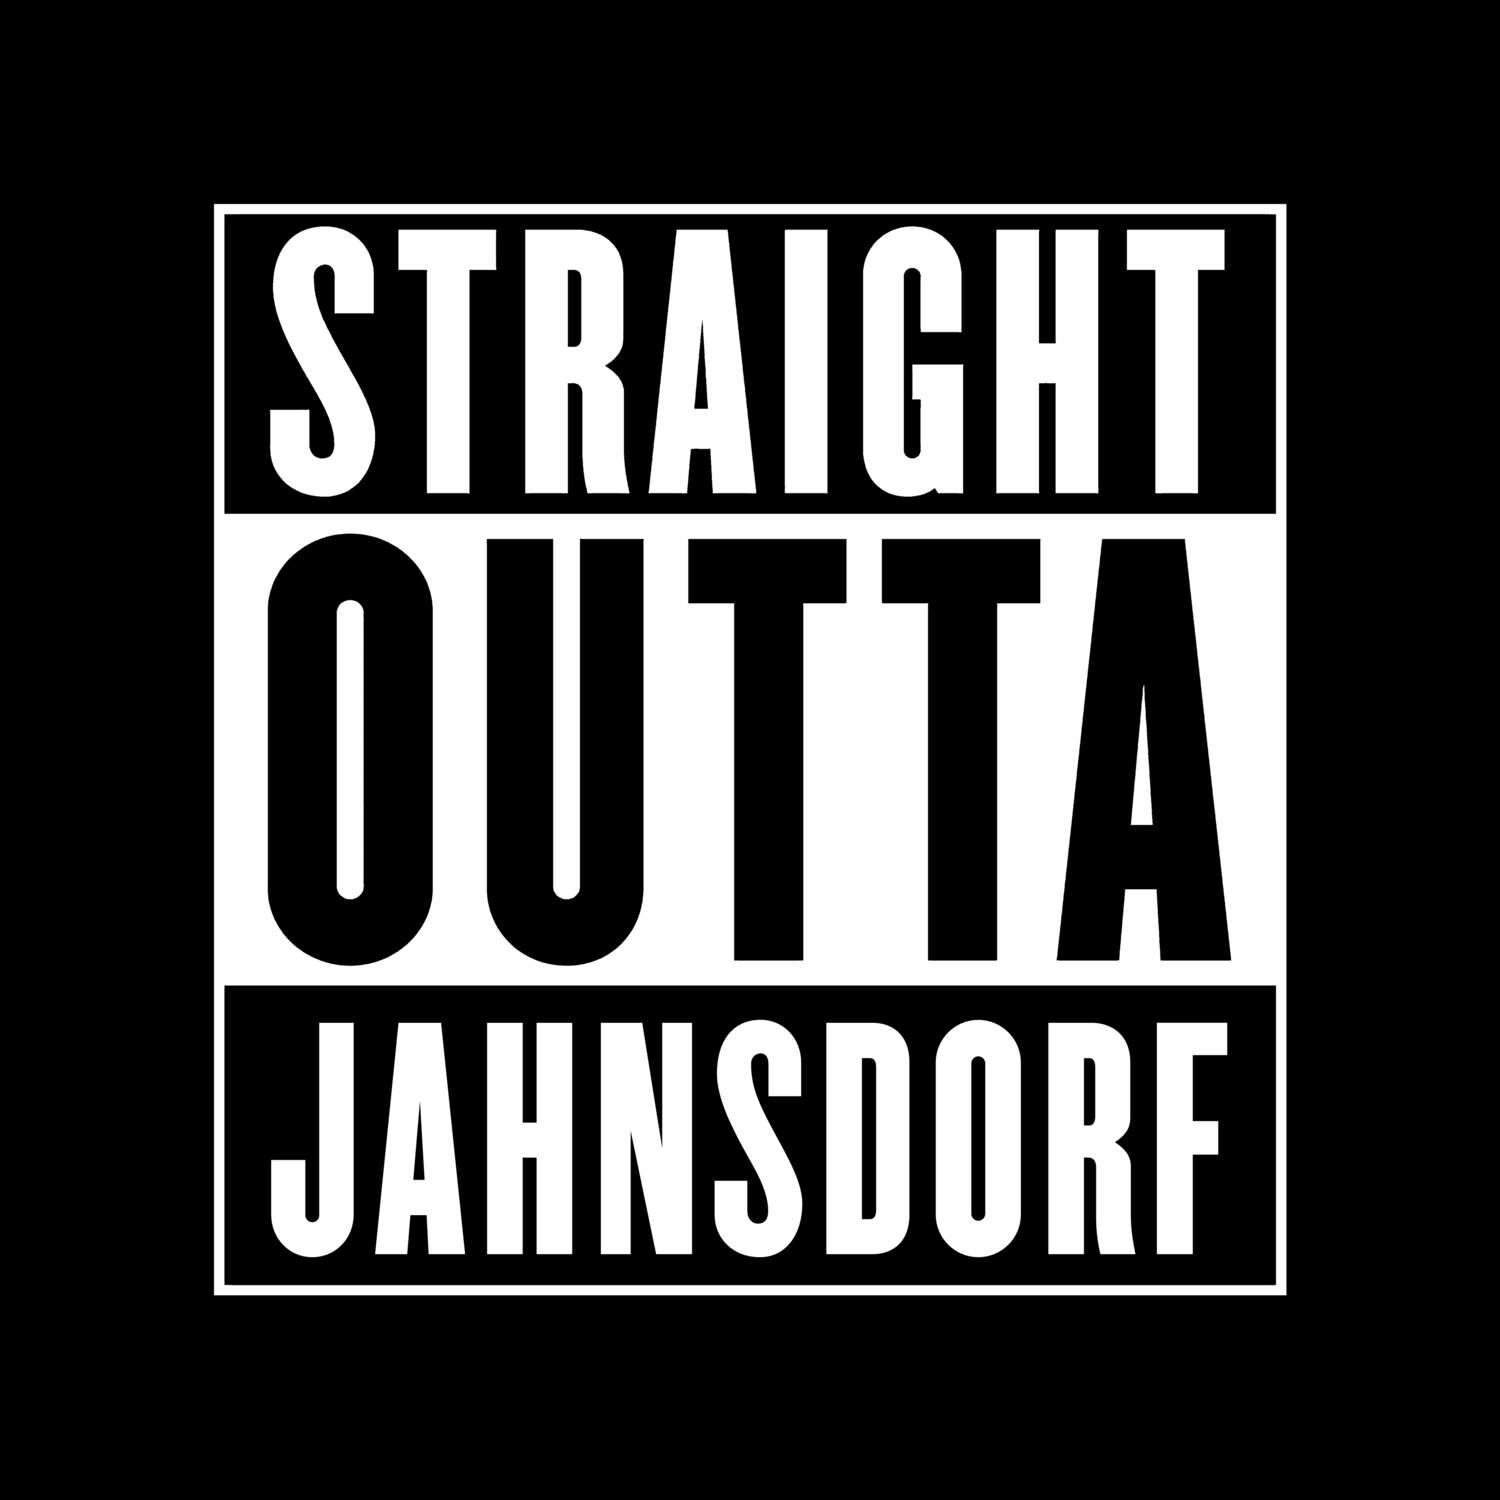 Jahnsdorf T-Shirt »Straight Outta«